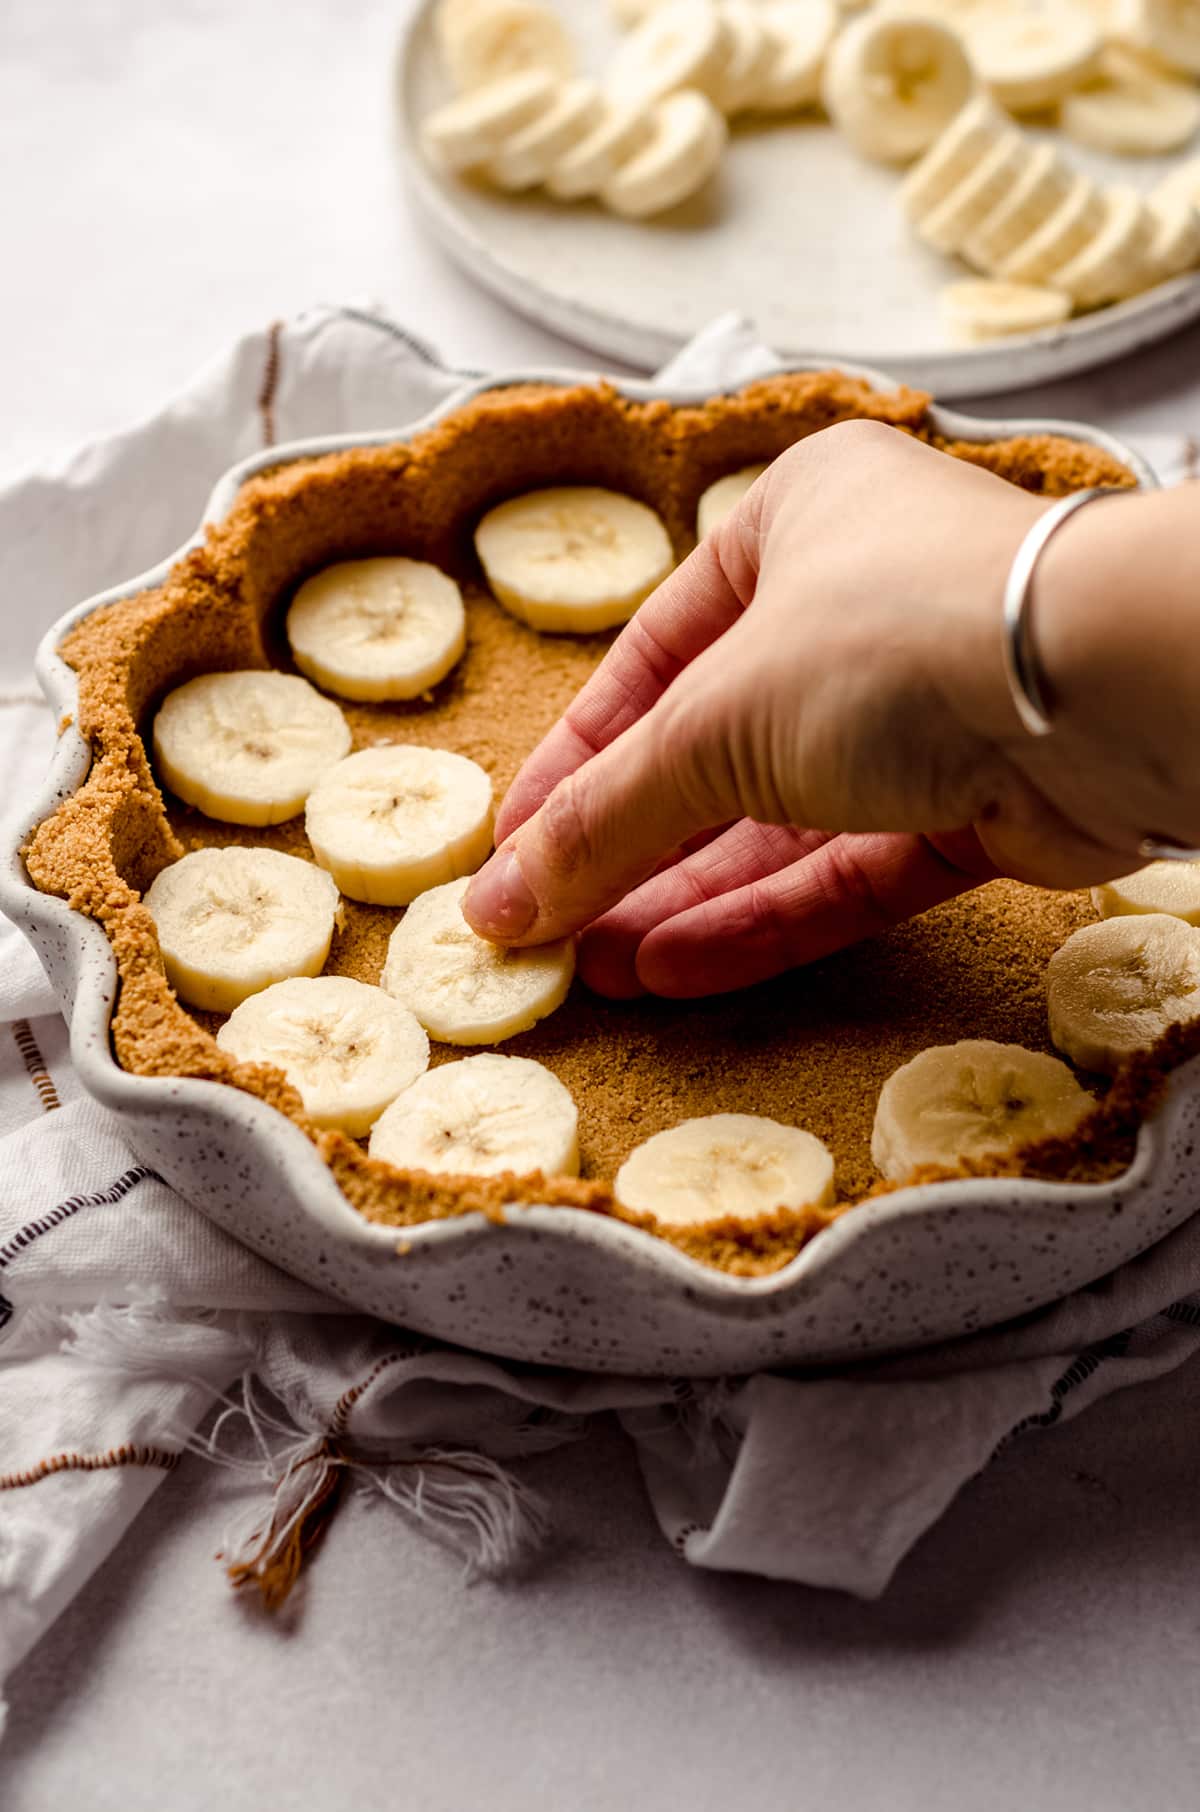 placing bananas into a graham cracker crust for banoffee pie